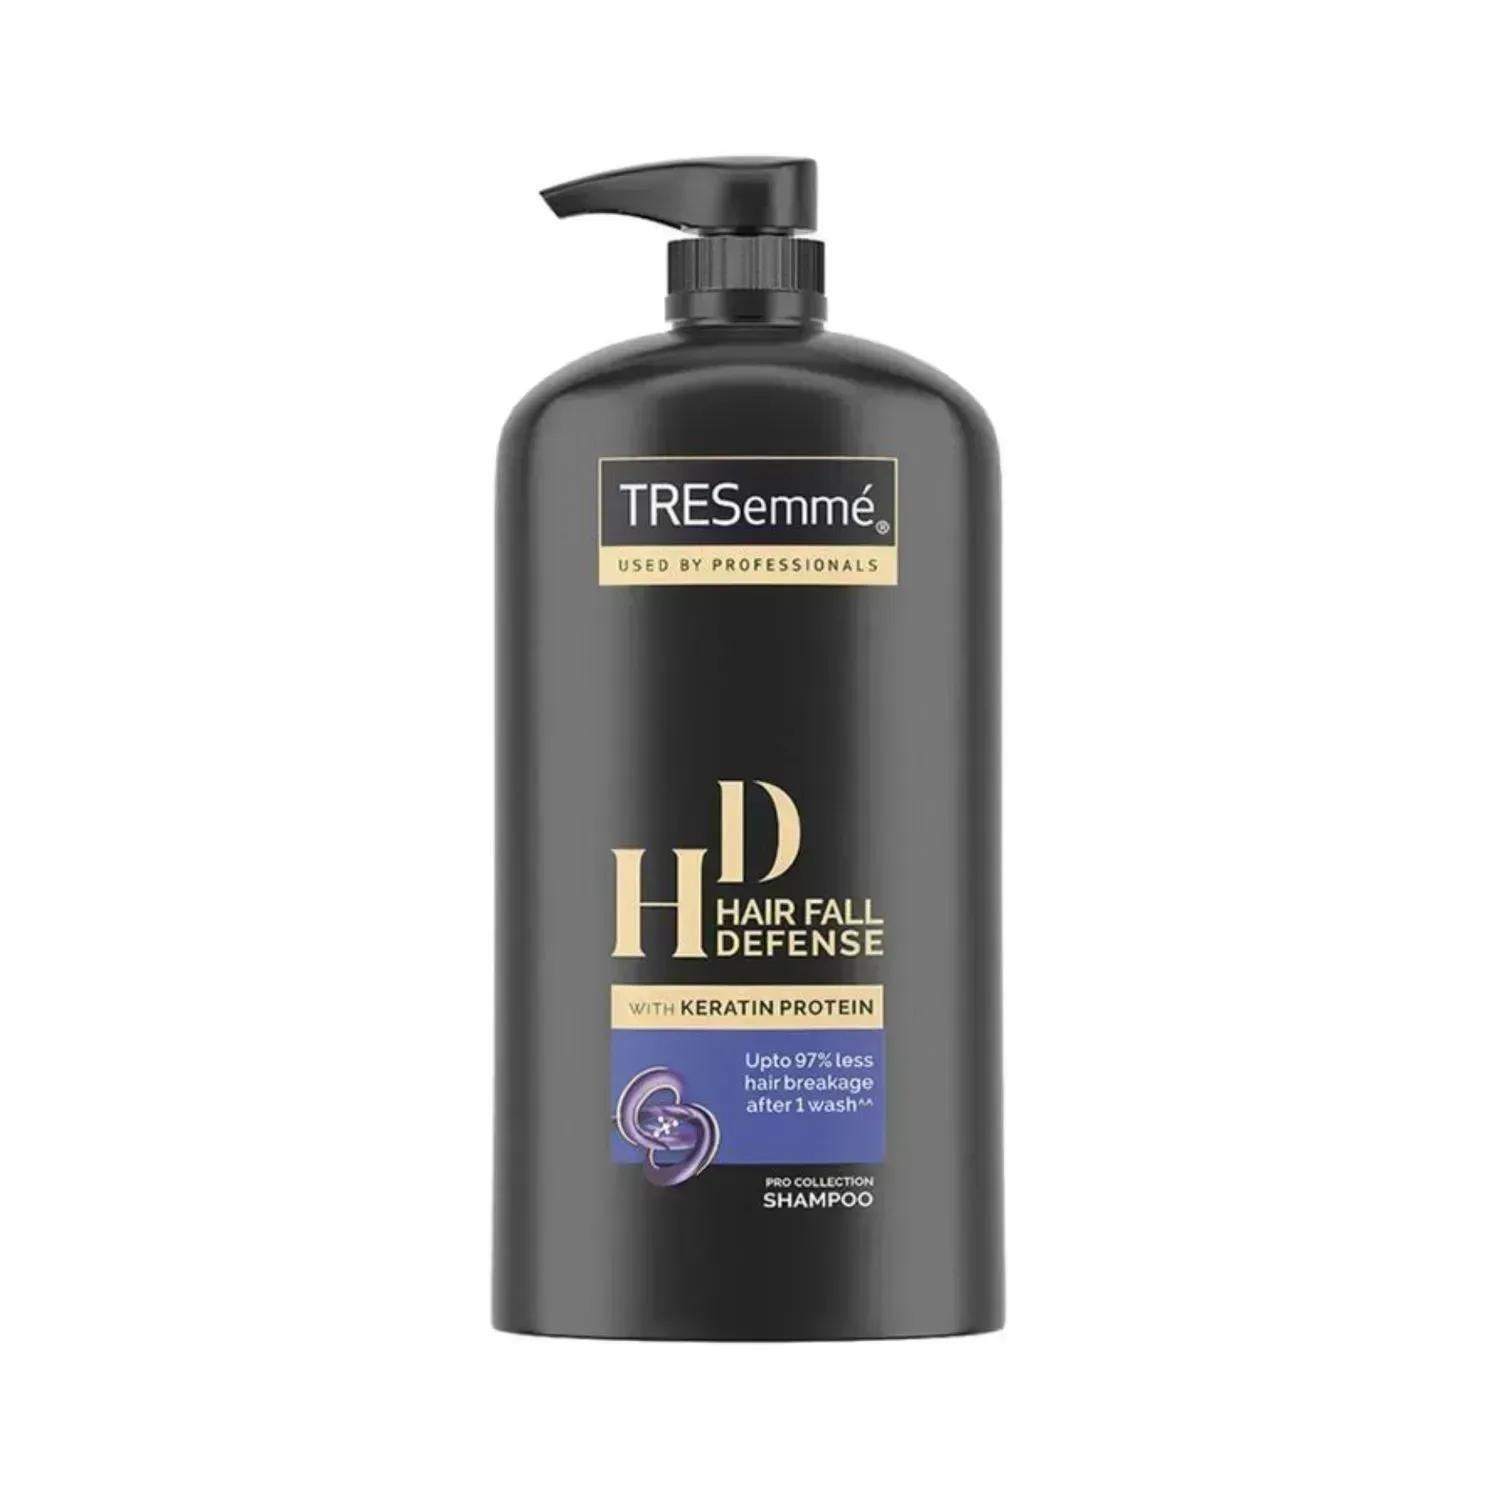 tresemme hair fall defence shampoo - (1000ml)